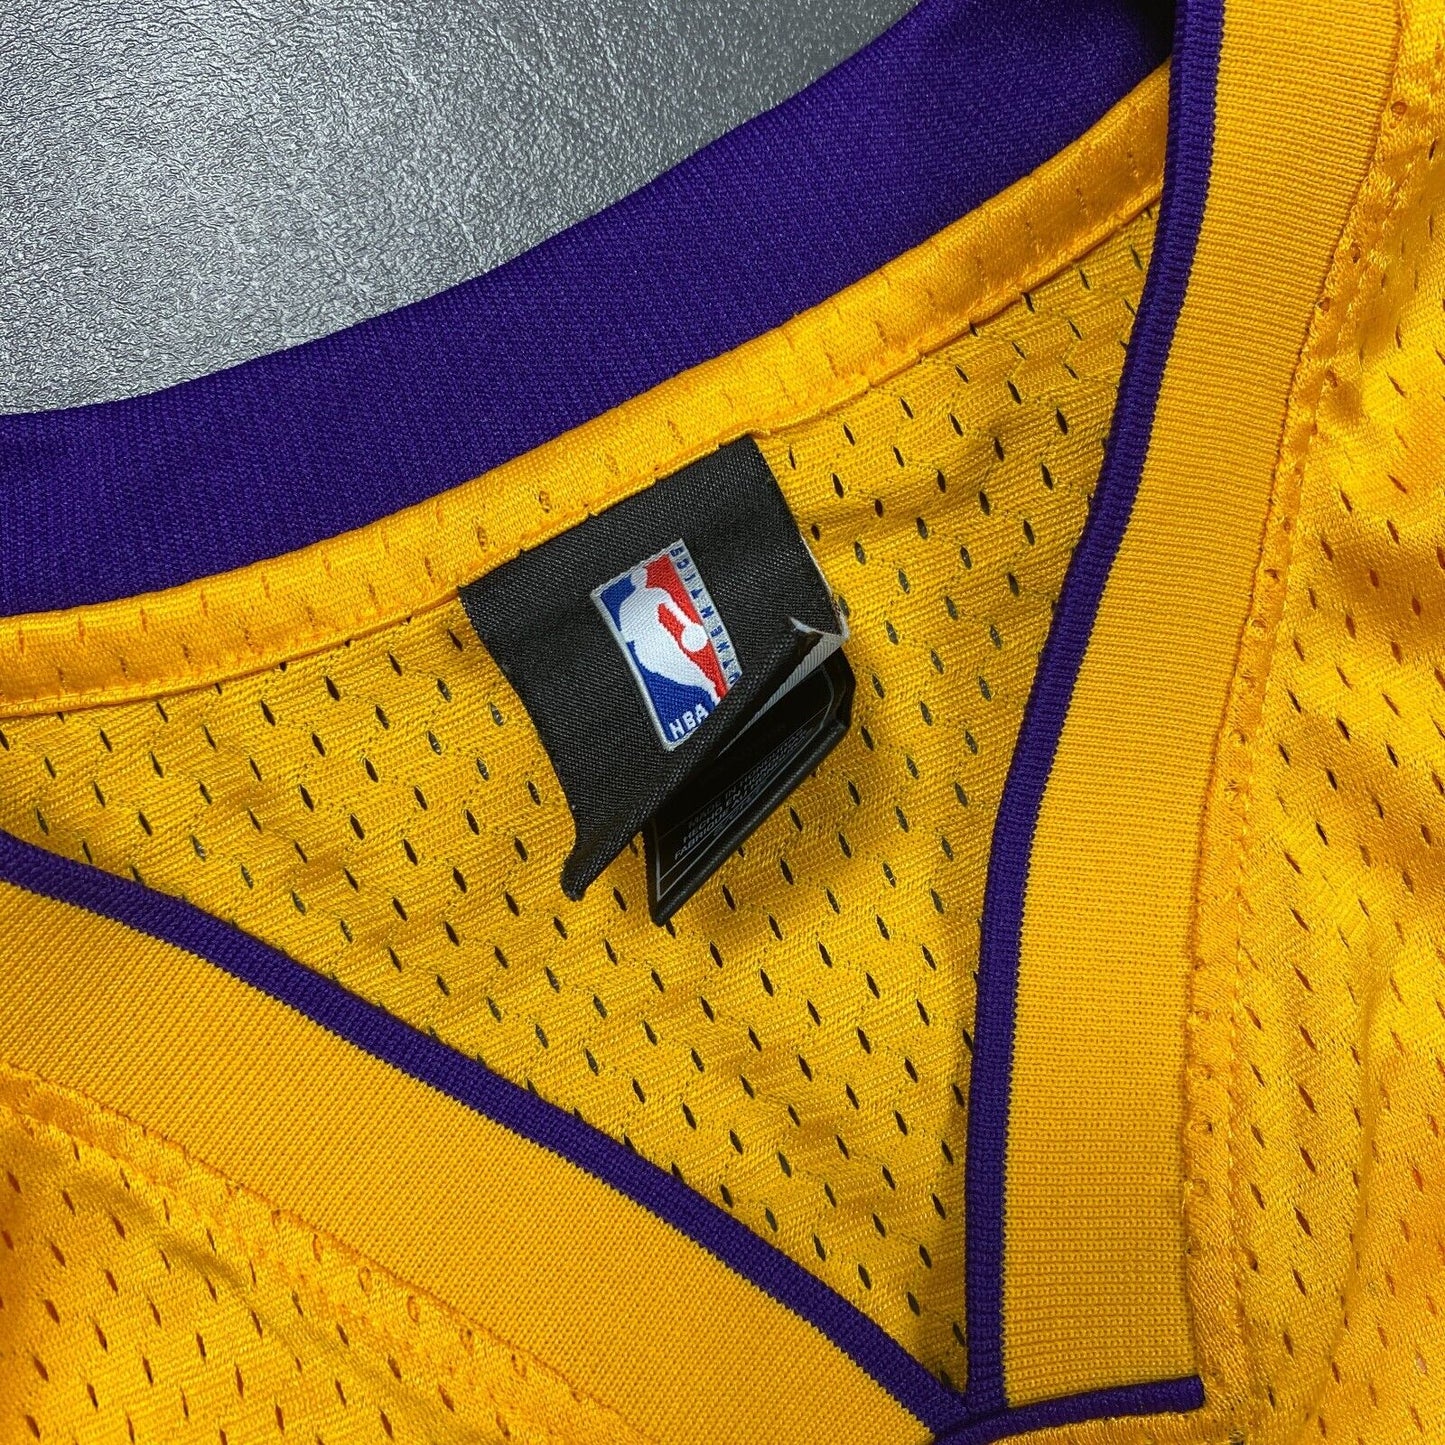 100% Authentic Kobe Bryant Adidas Los Angeles Lakers Swingman Jersey Size S Mens